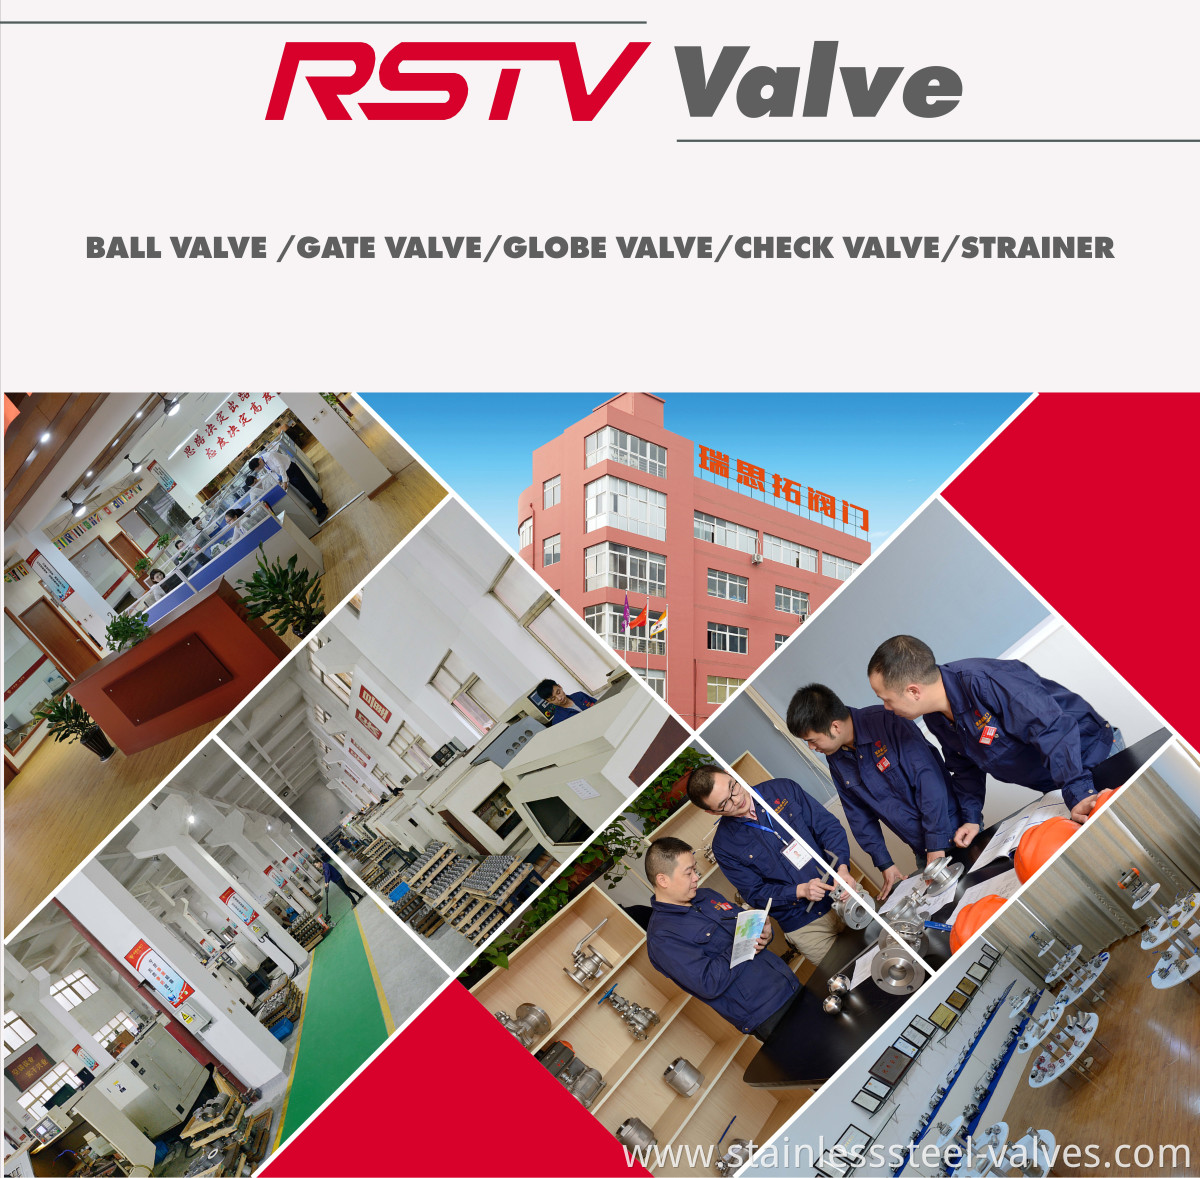 RST VALVE STAINLESS STEEL BALL GATE GLOBE CHECK VALVE FACTROY